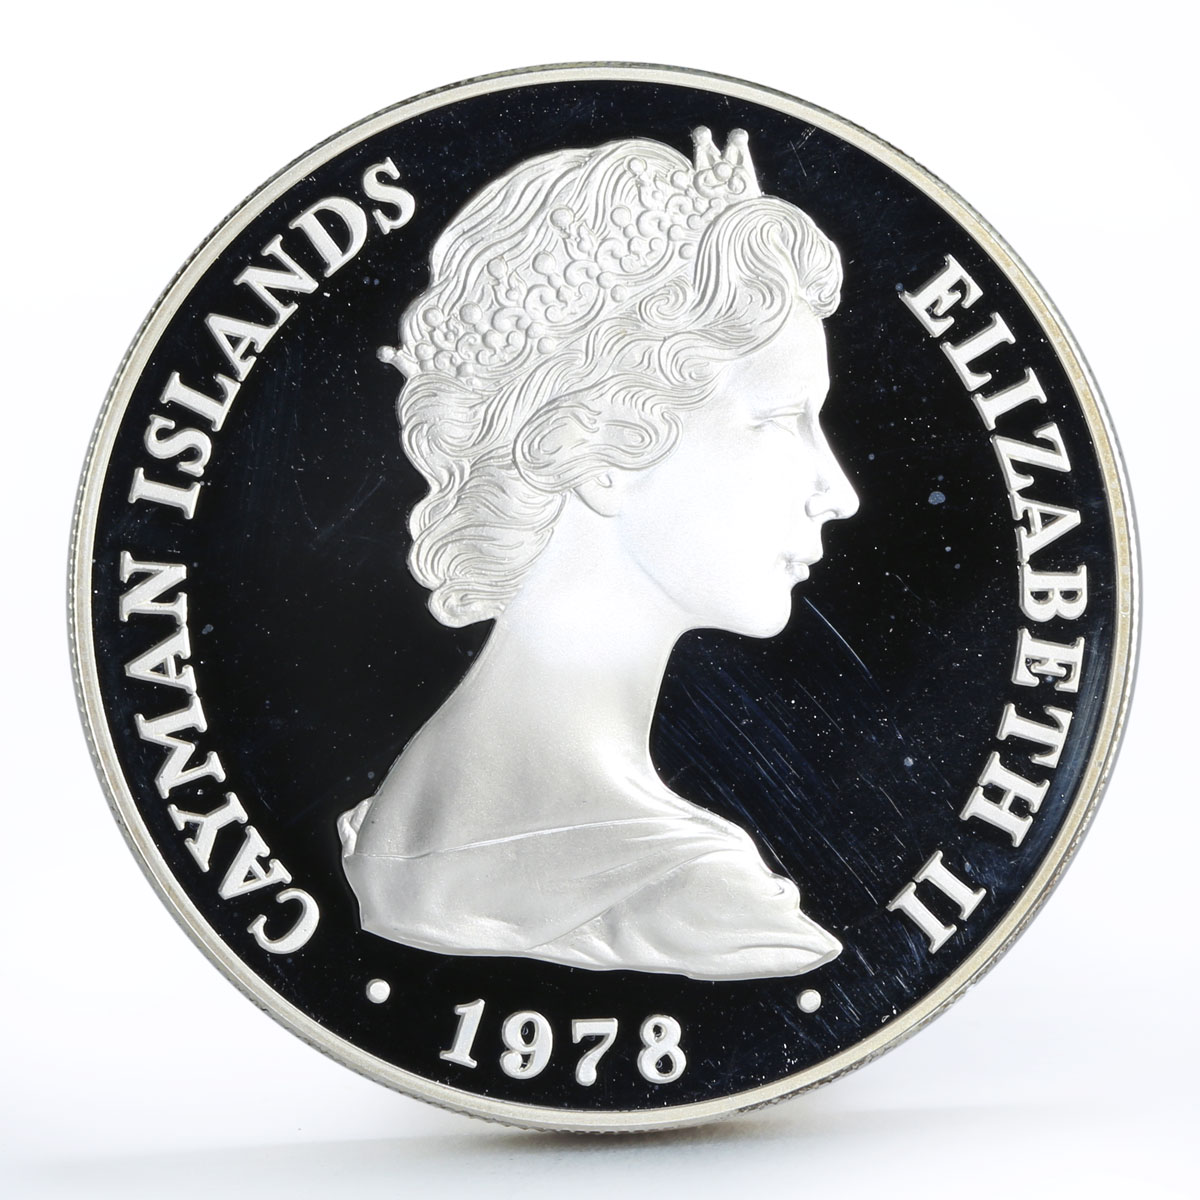 Cayman Islands 25 dollars 25th Coronation Jubilee Royal Chair silver coin 1978